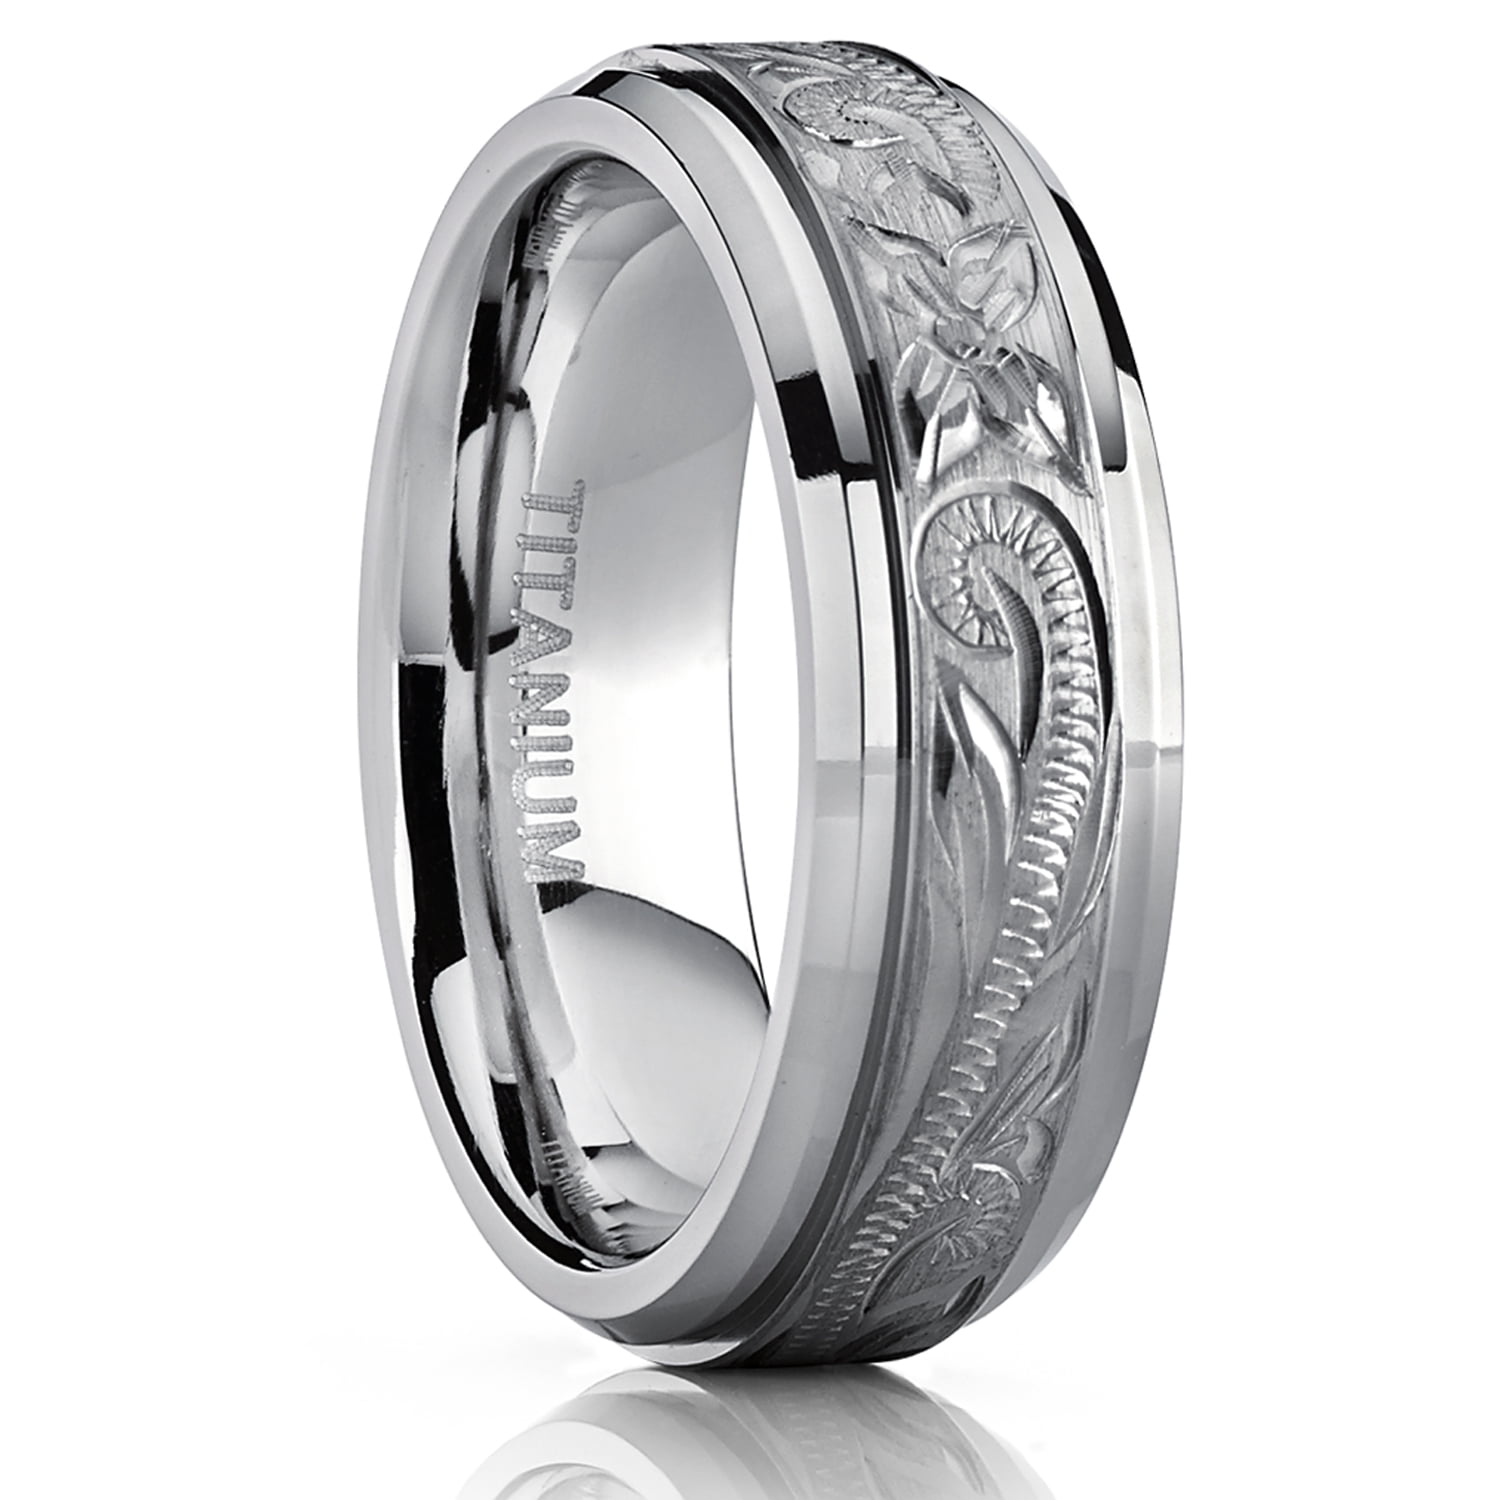  Men s  Hand Engraved Titanium  Wedding  Ring  Band Comfort 